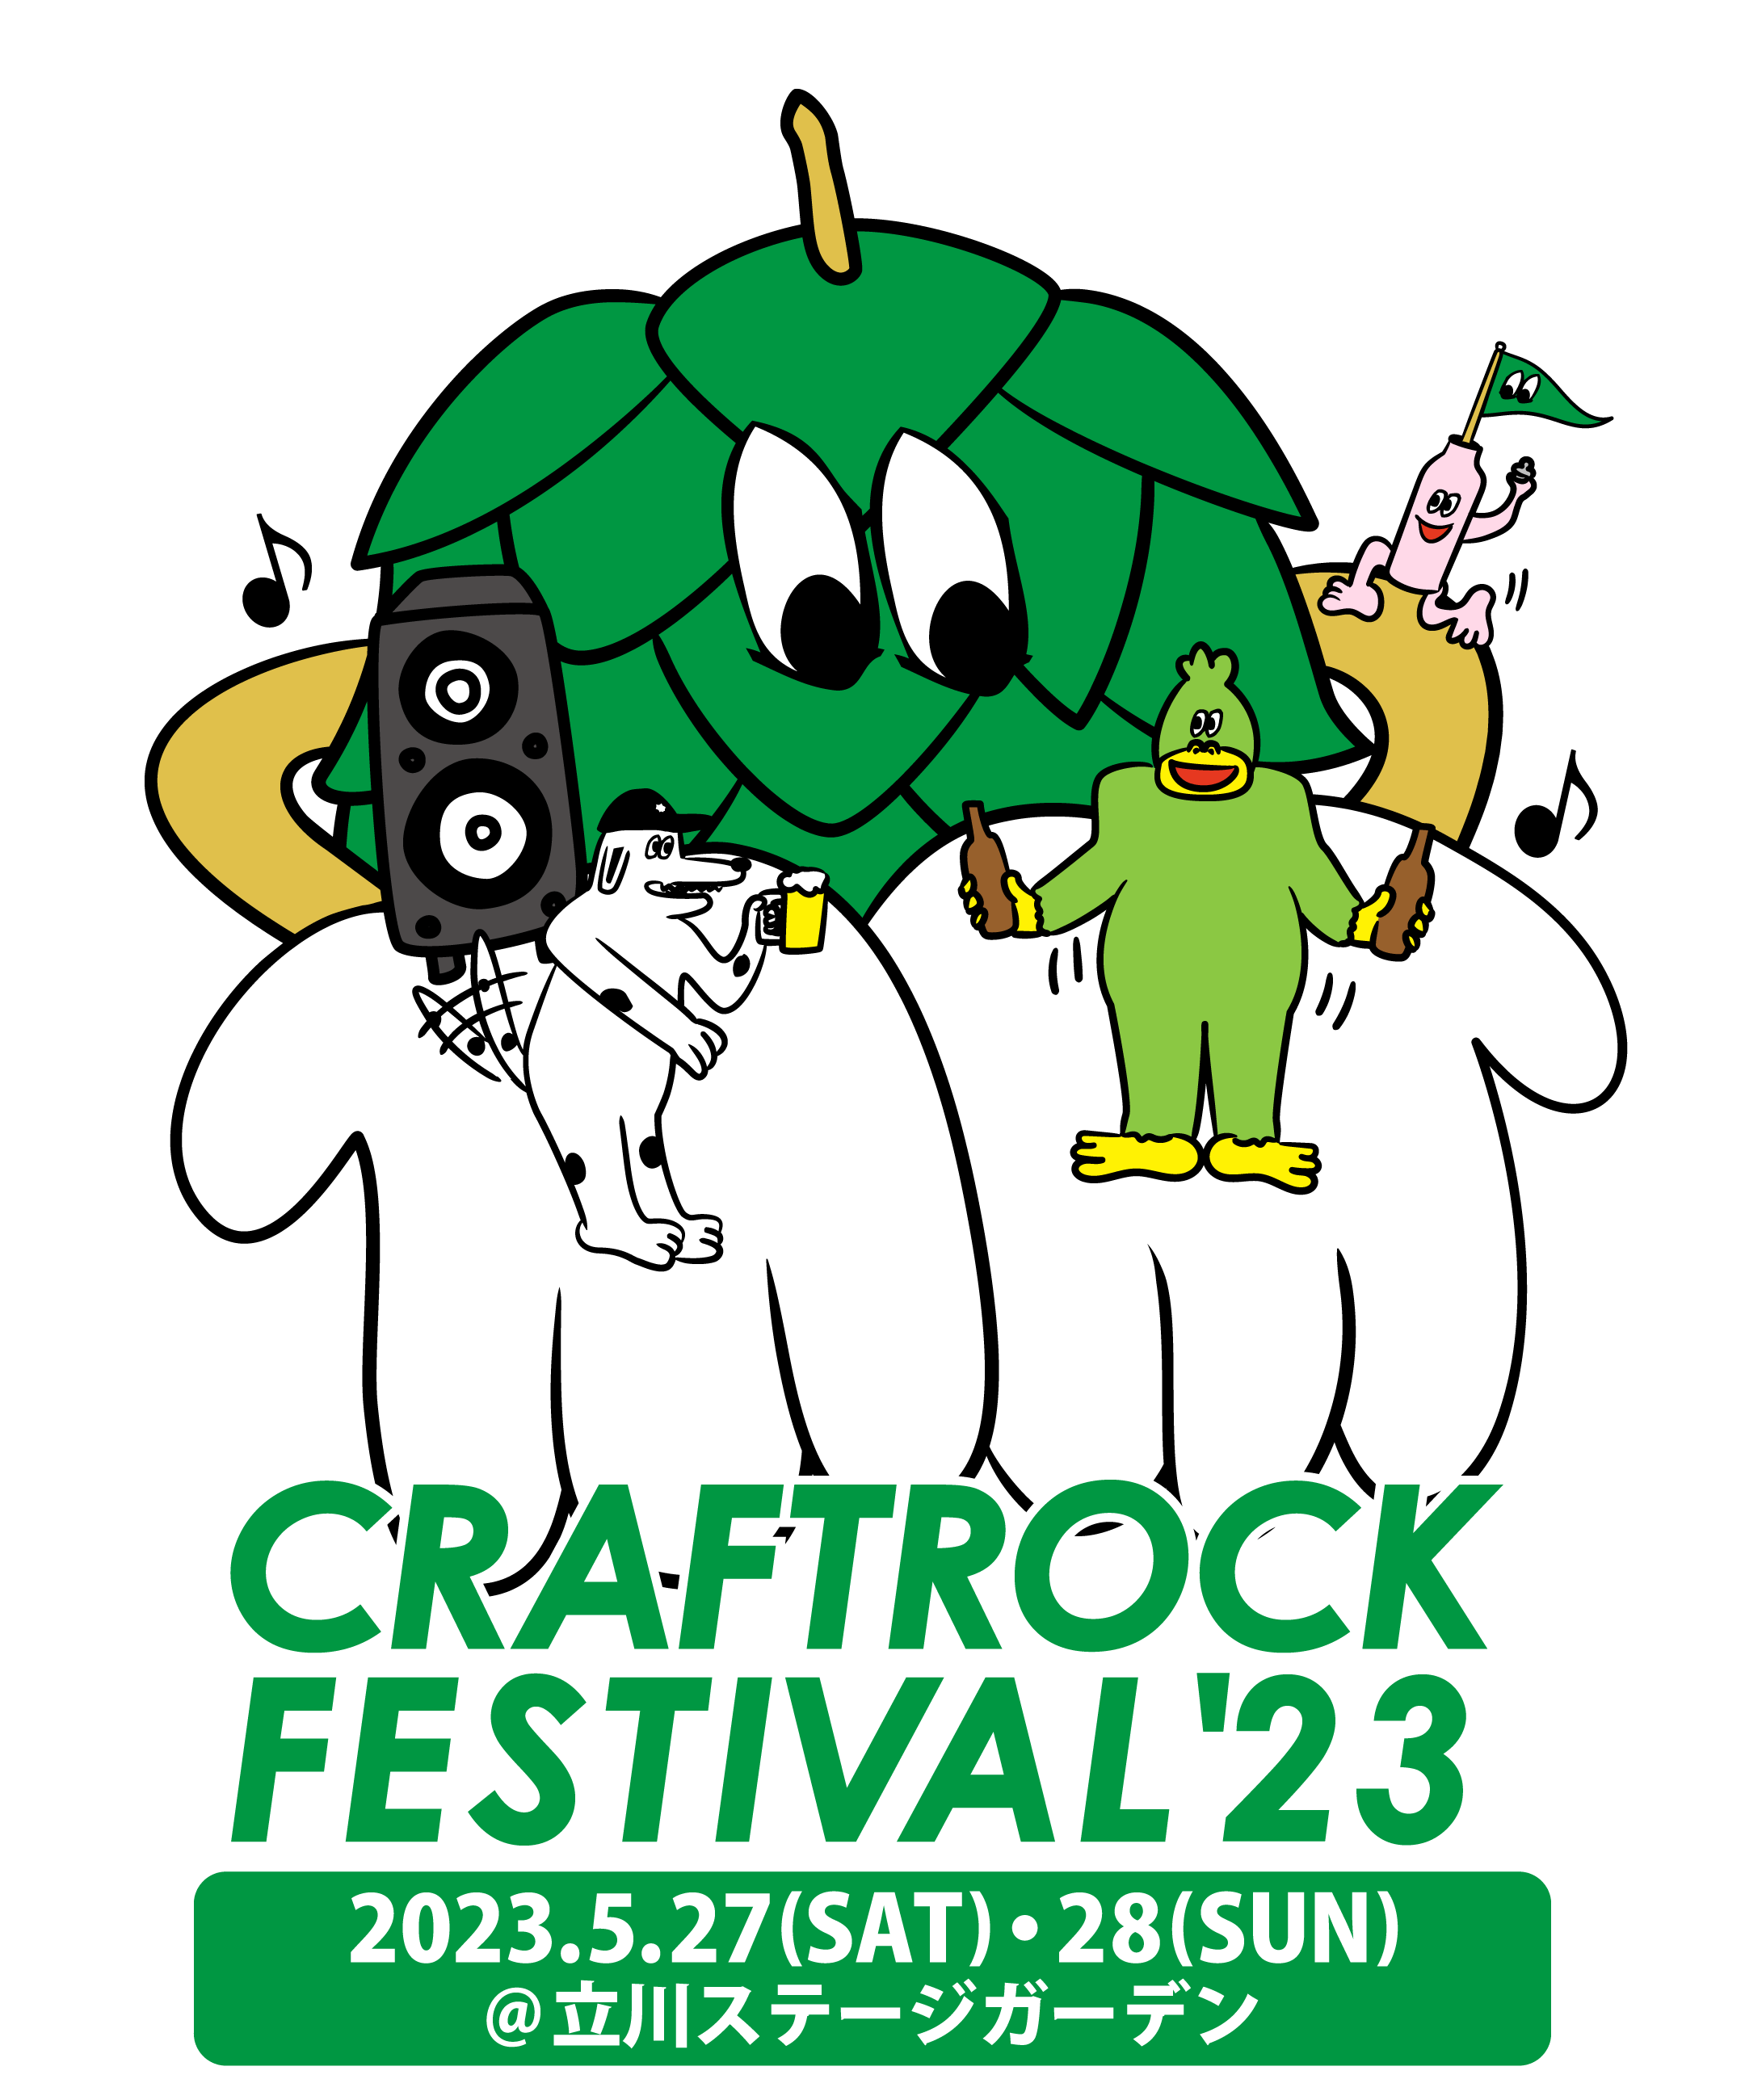 CRAFTROCK FESTIVAL ’23